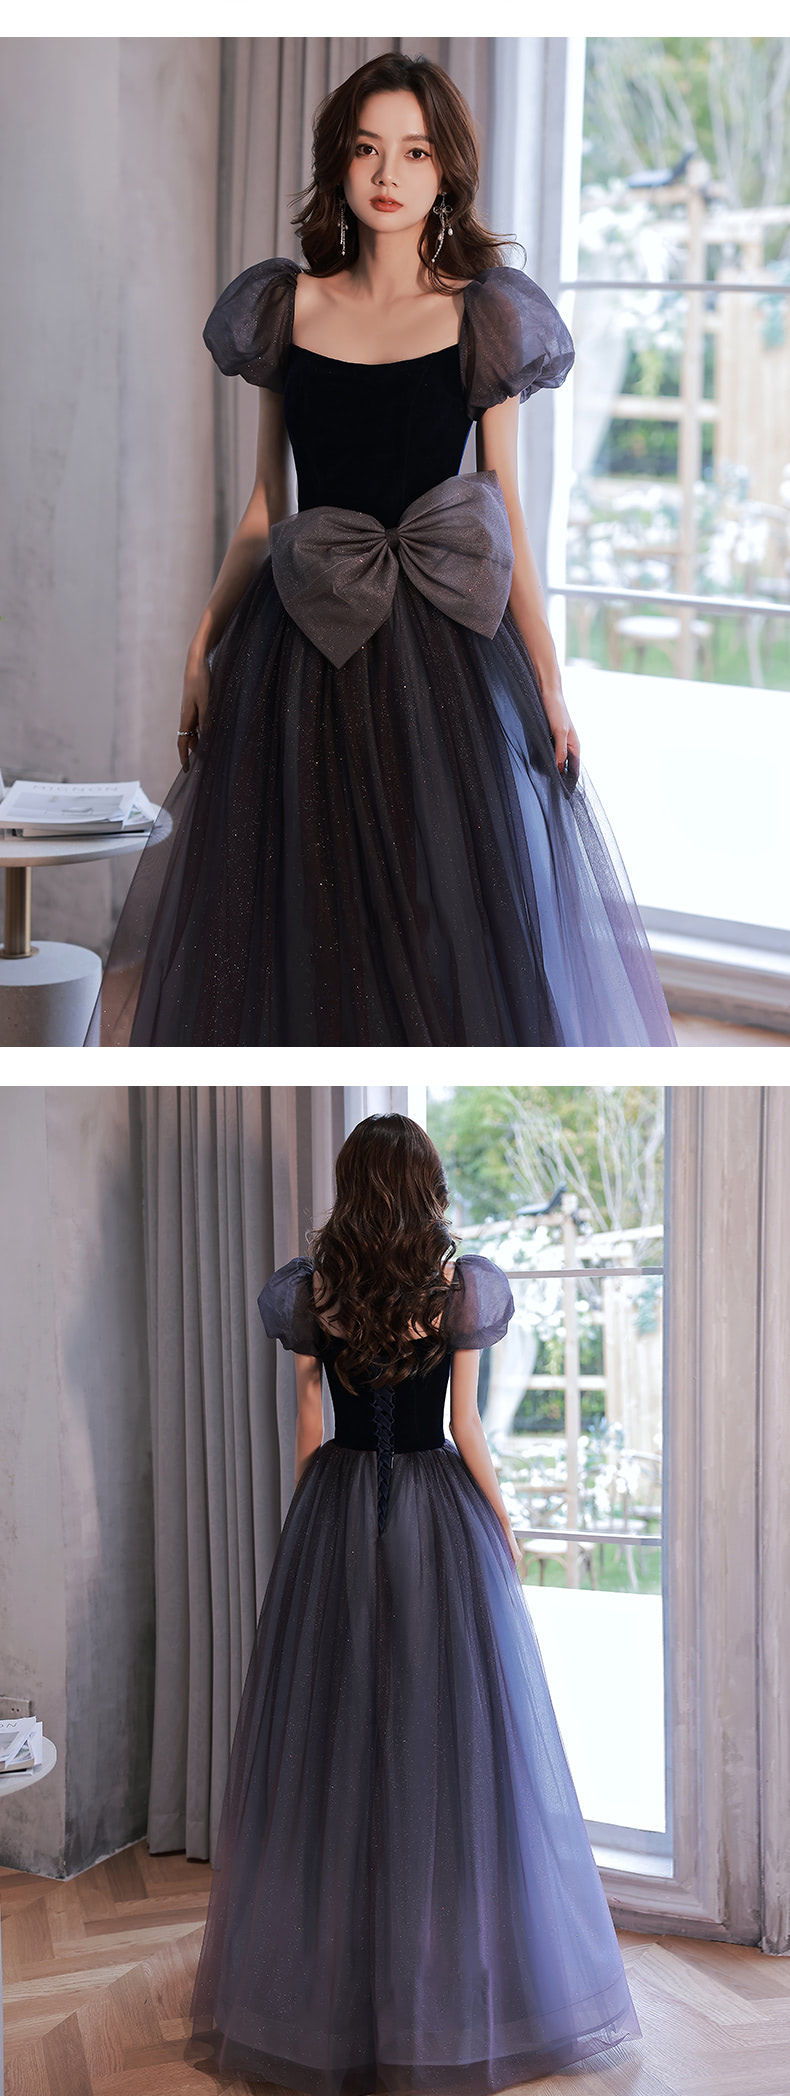 Beautiful-Slim-Gradient-Black-Prom-Party-Ball-Gown-Long-Dress14.jpg